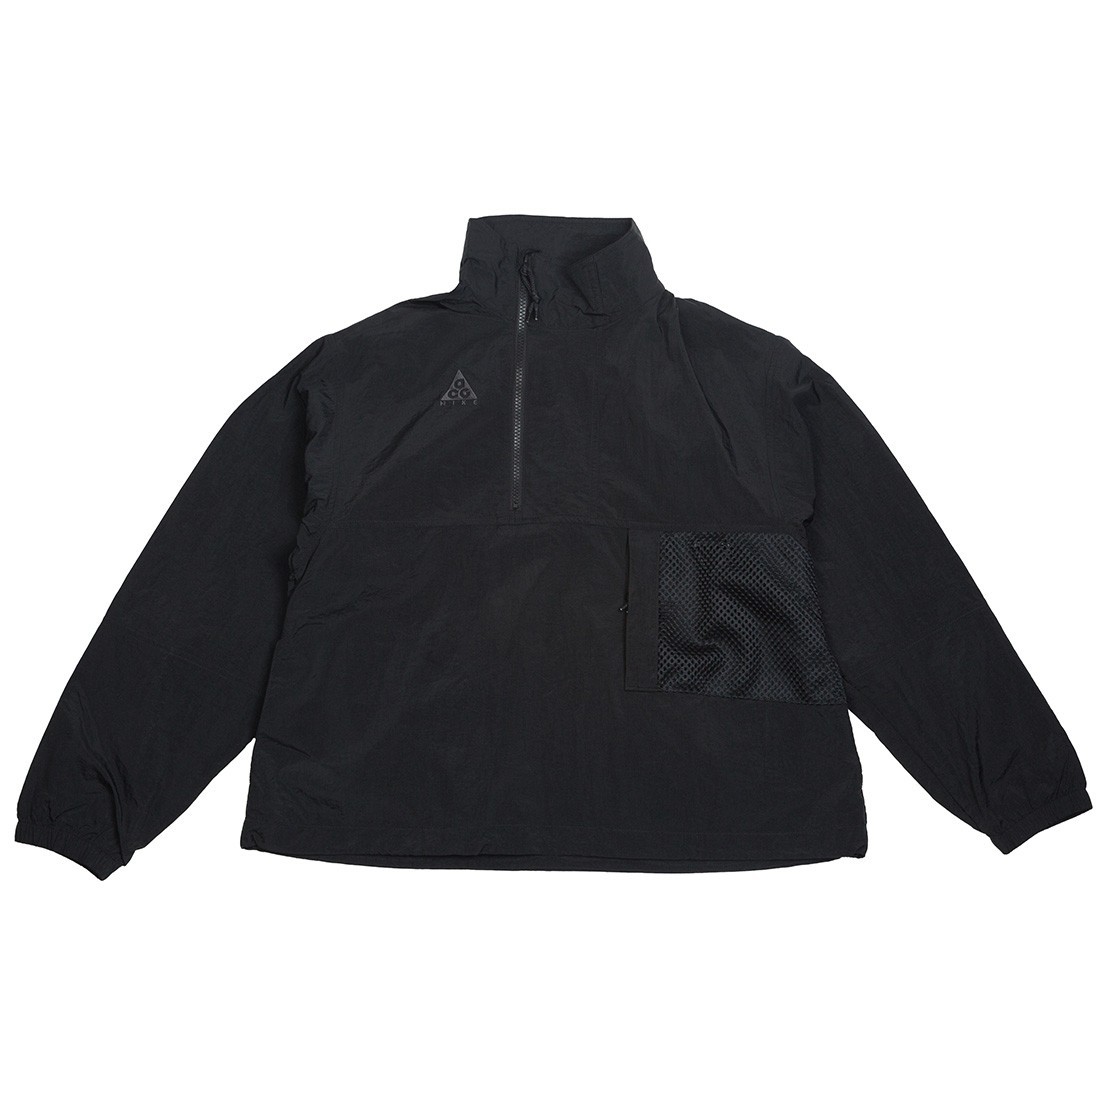 black acg jacket